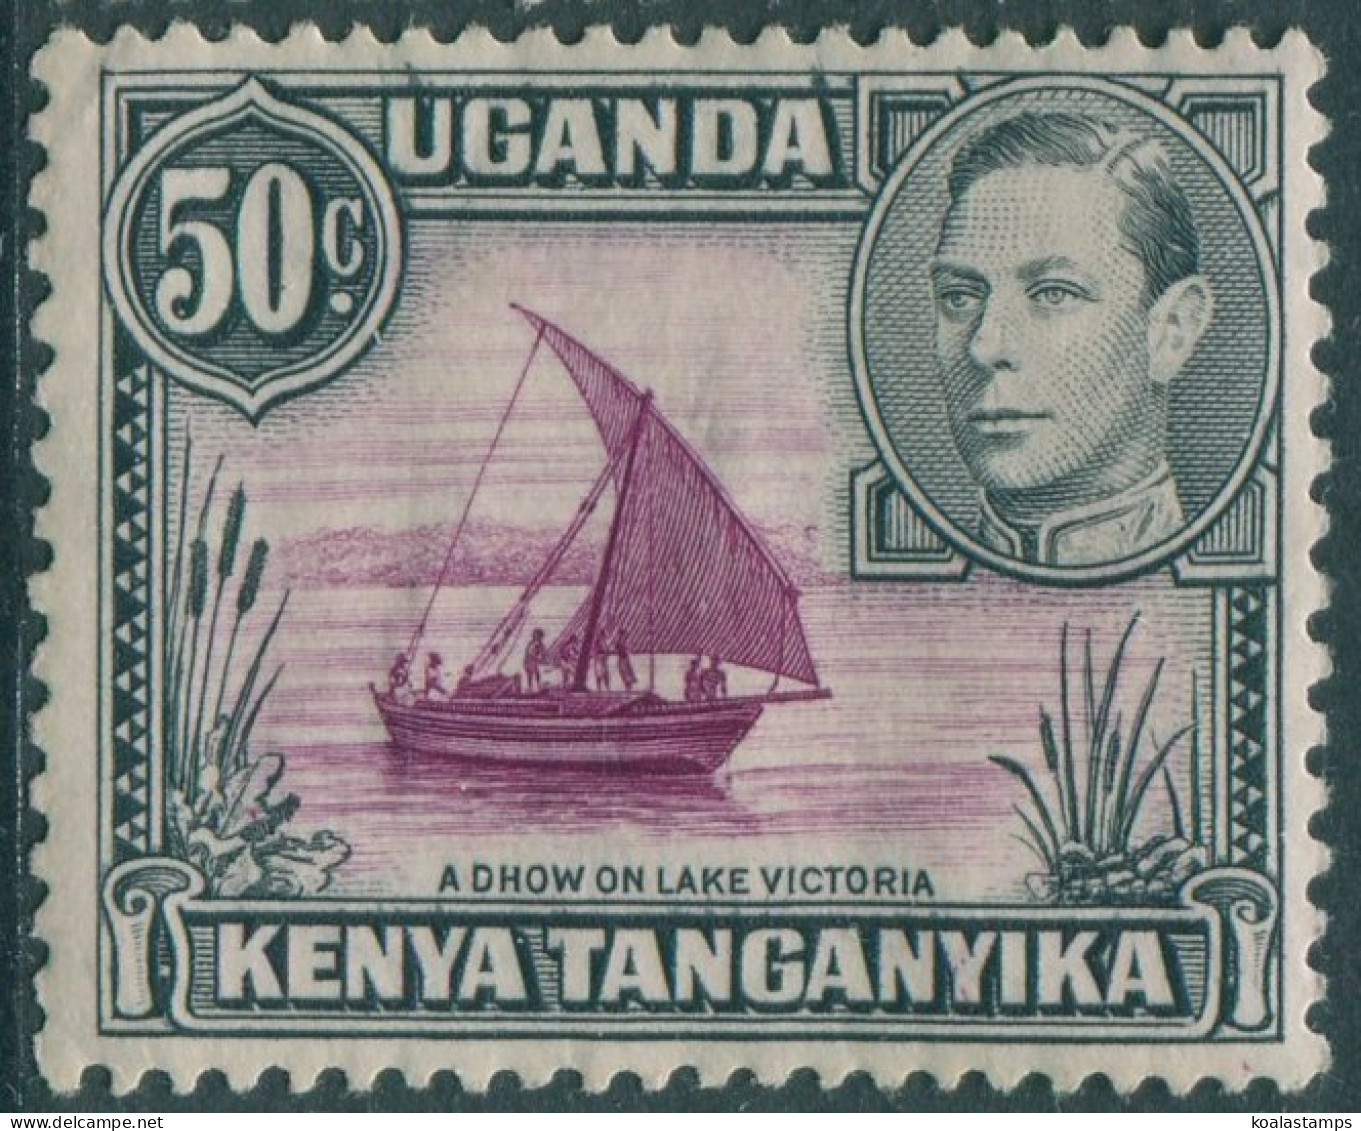 Kenya Uganda And Tanganyika 1938 SG144 50c Black And Purple KGVI Dhow P13x11¾ MH - Kenya, Uganda & Tanganyika